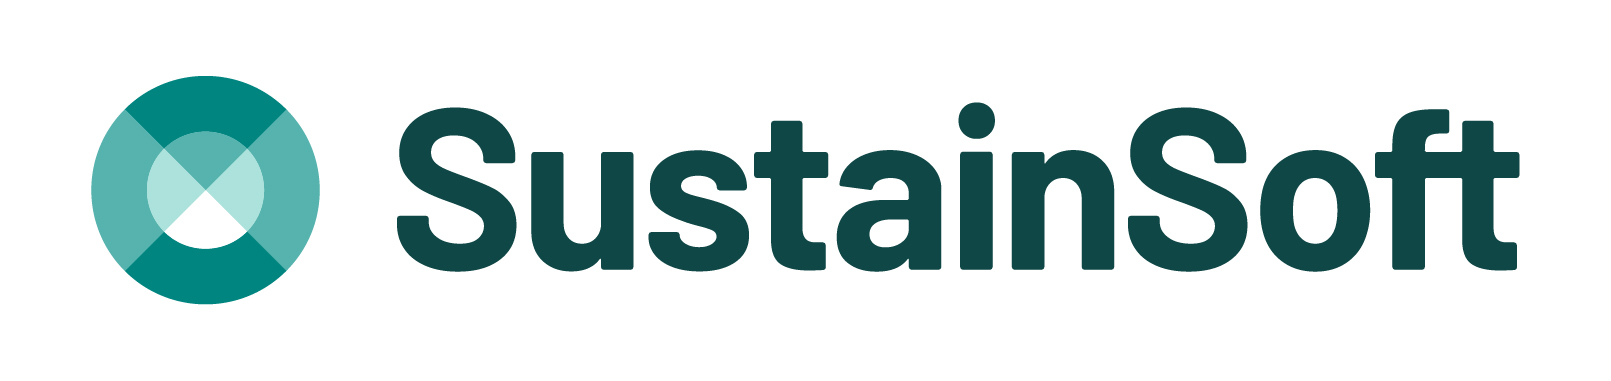 SustainSoft_Logo.jpg